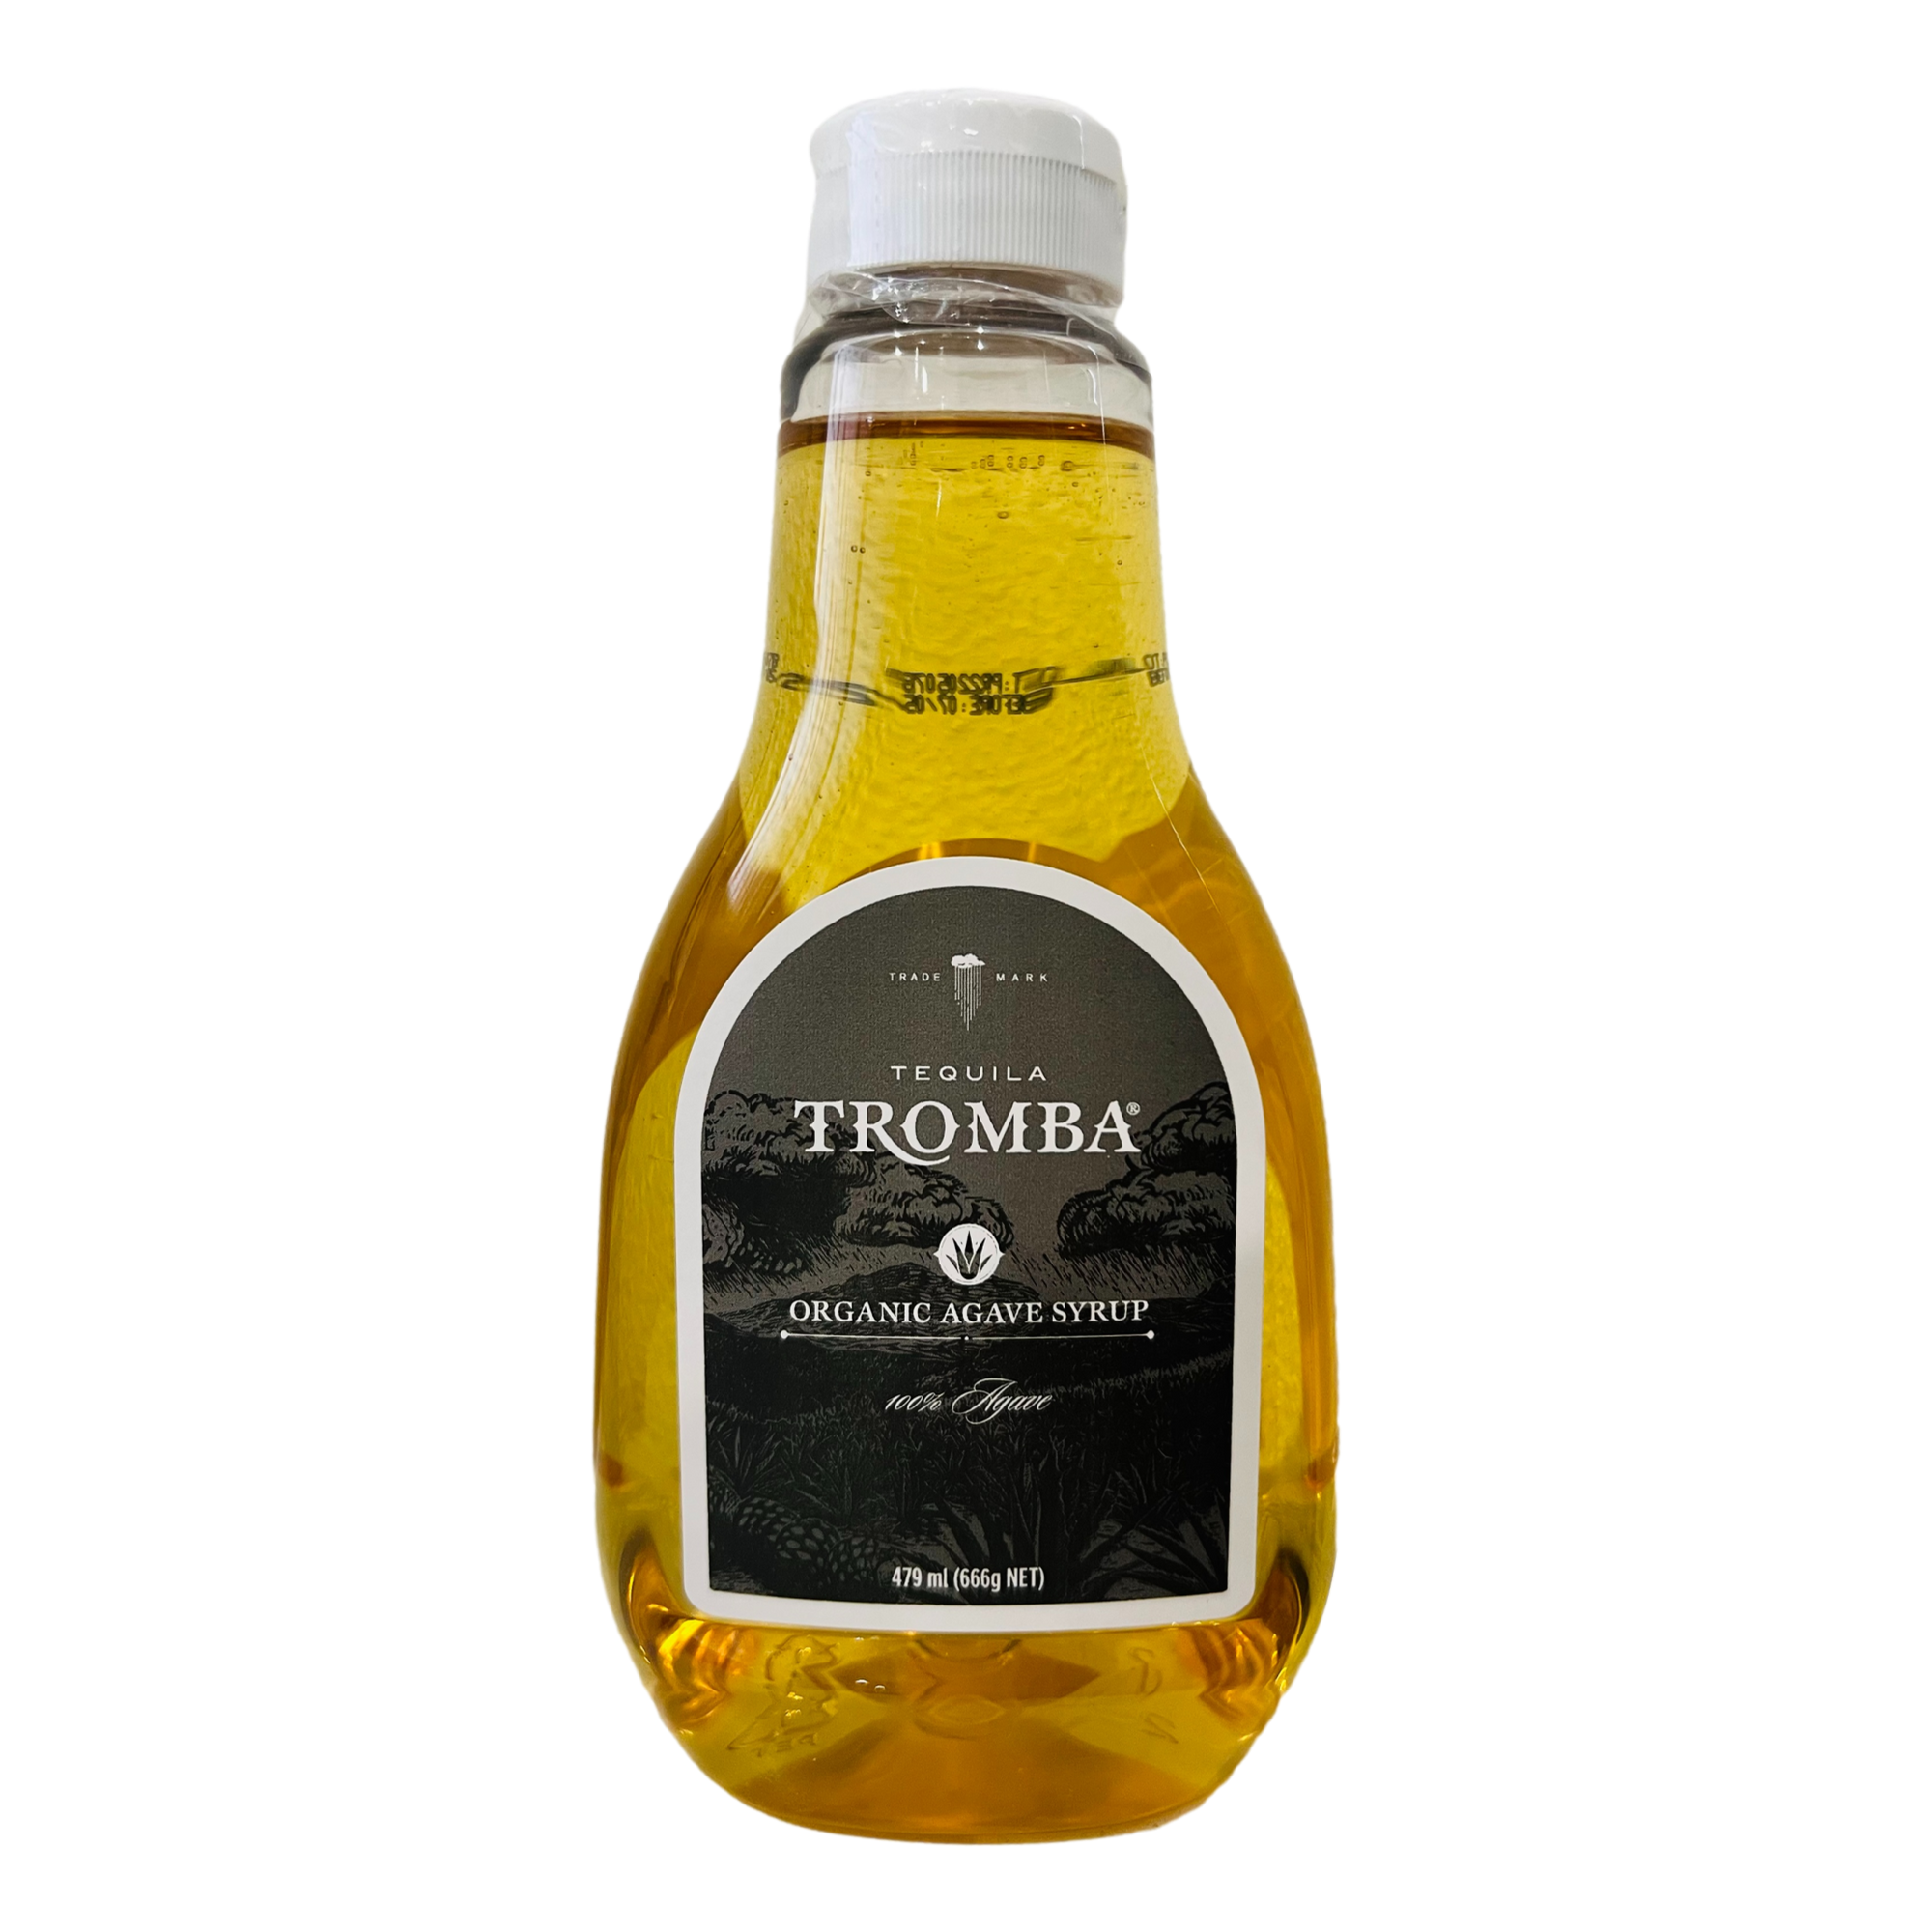 Tromba Organic Agave Syrup 479ml